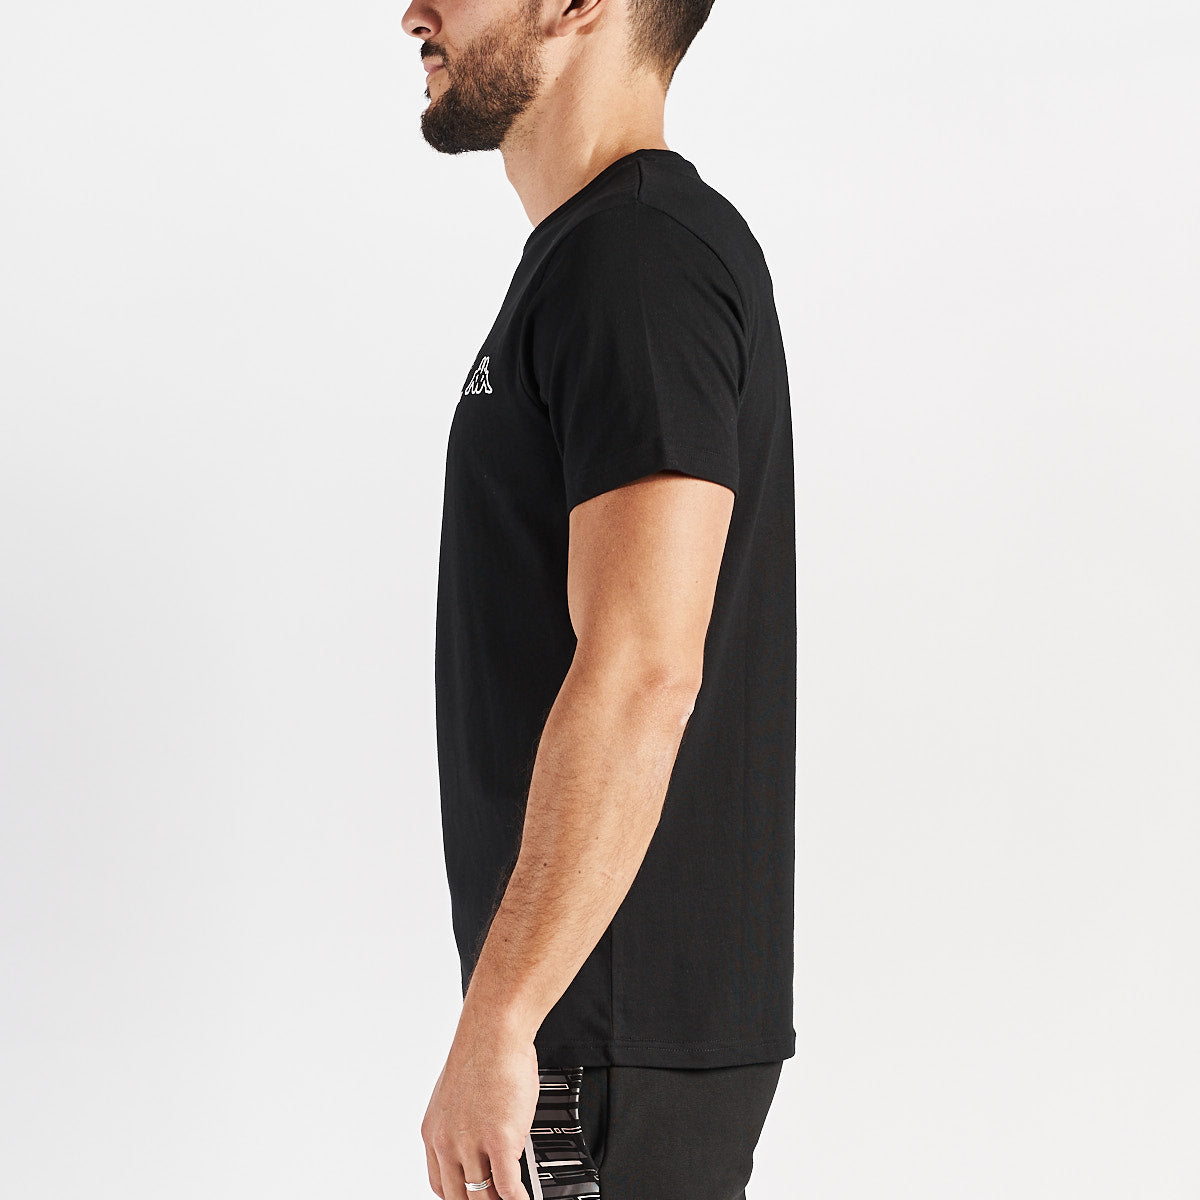 T-shirt Godot Noir Homme - Image 2